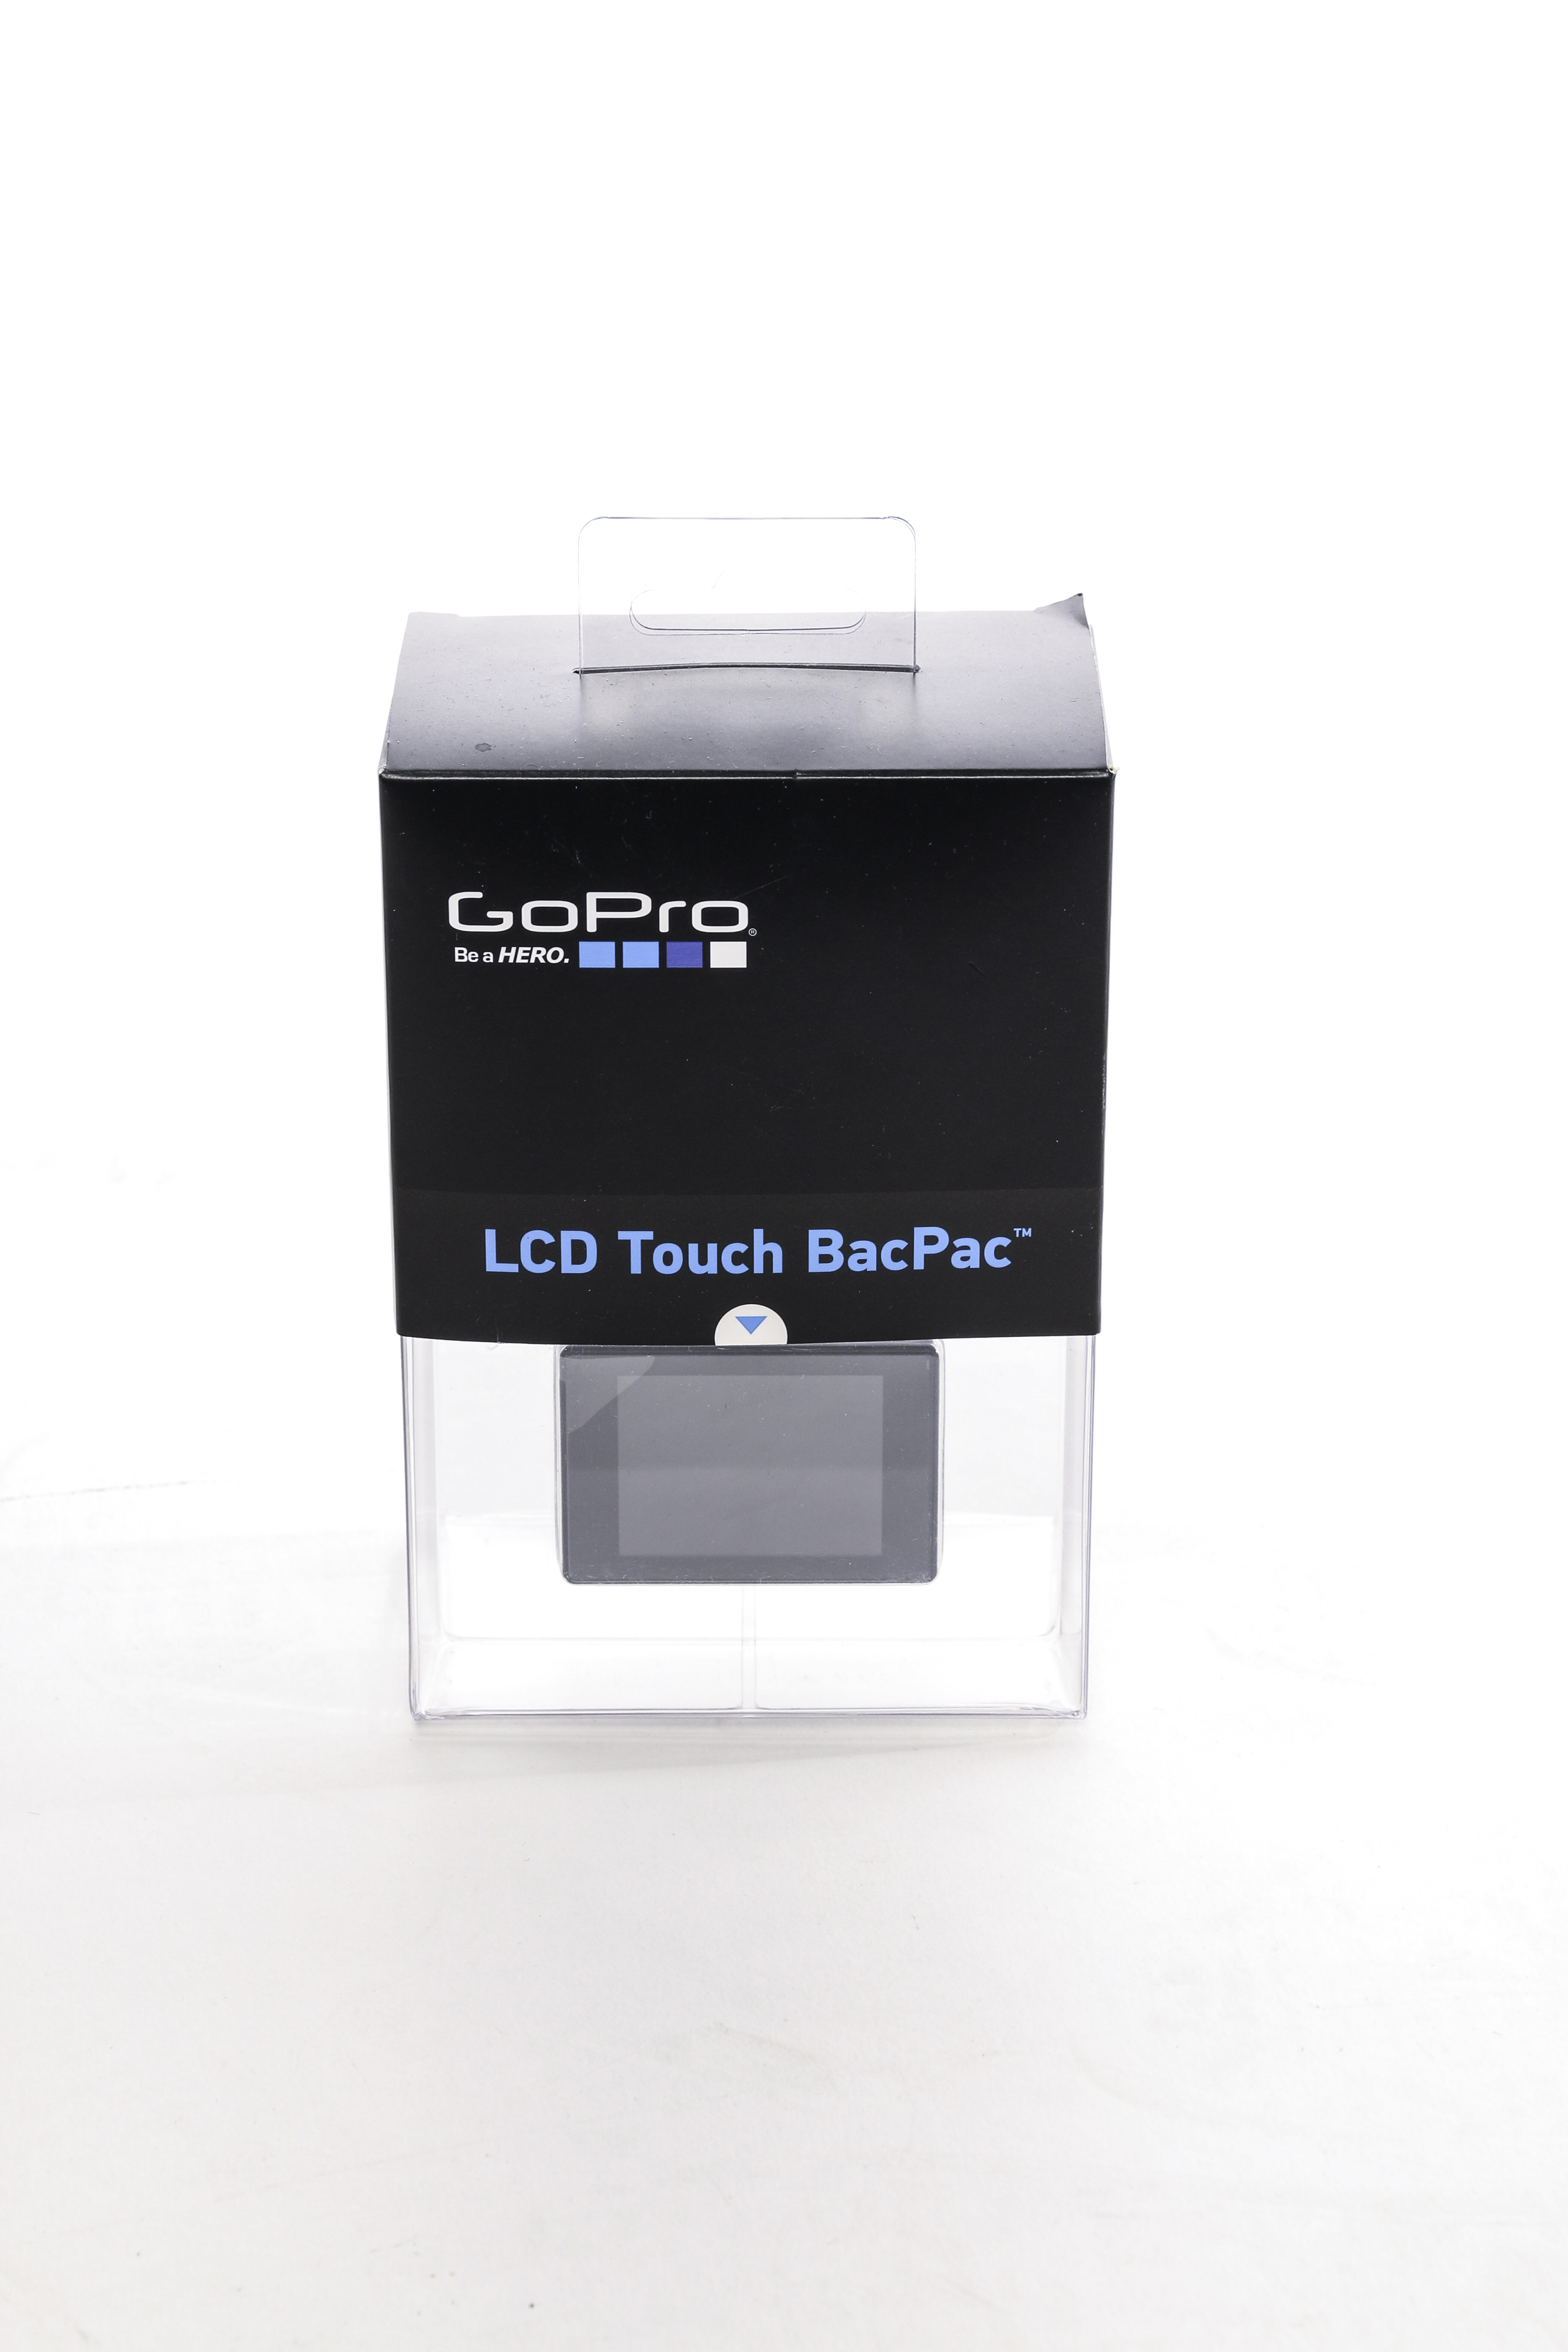 GoPro LCD Touch BacPac (Abverkauf) Bild 01